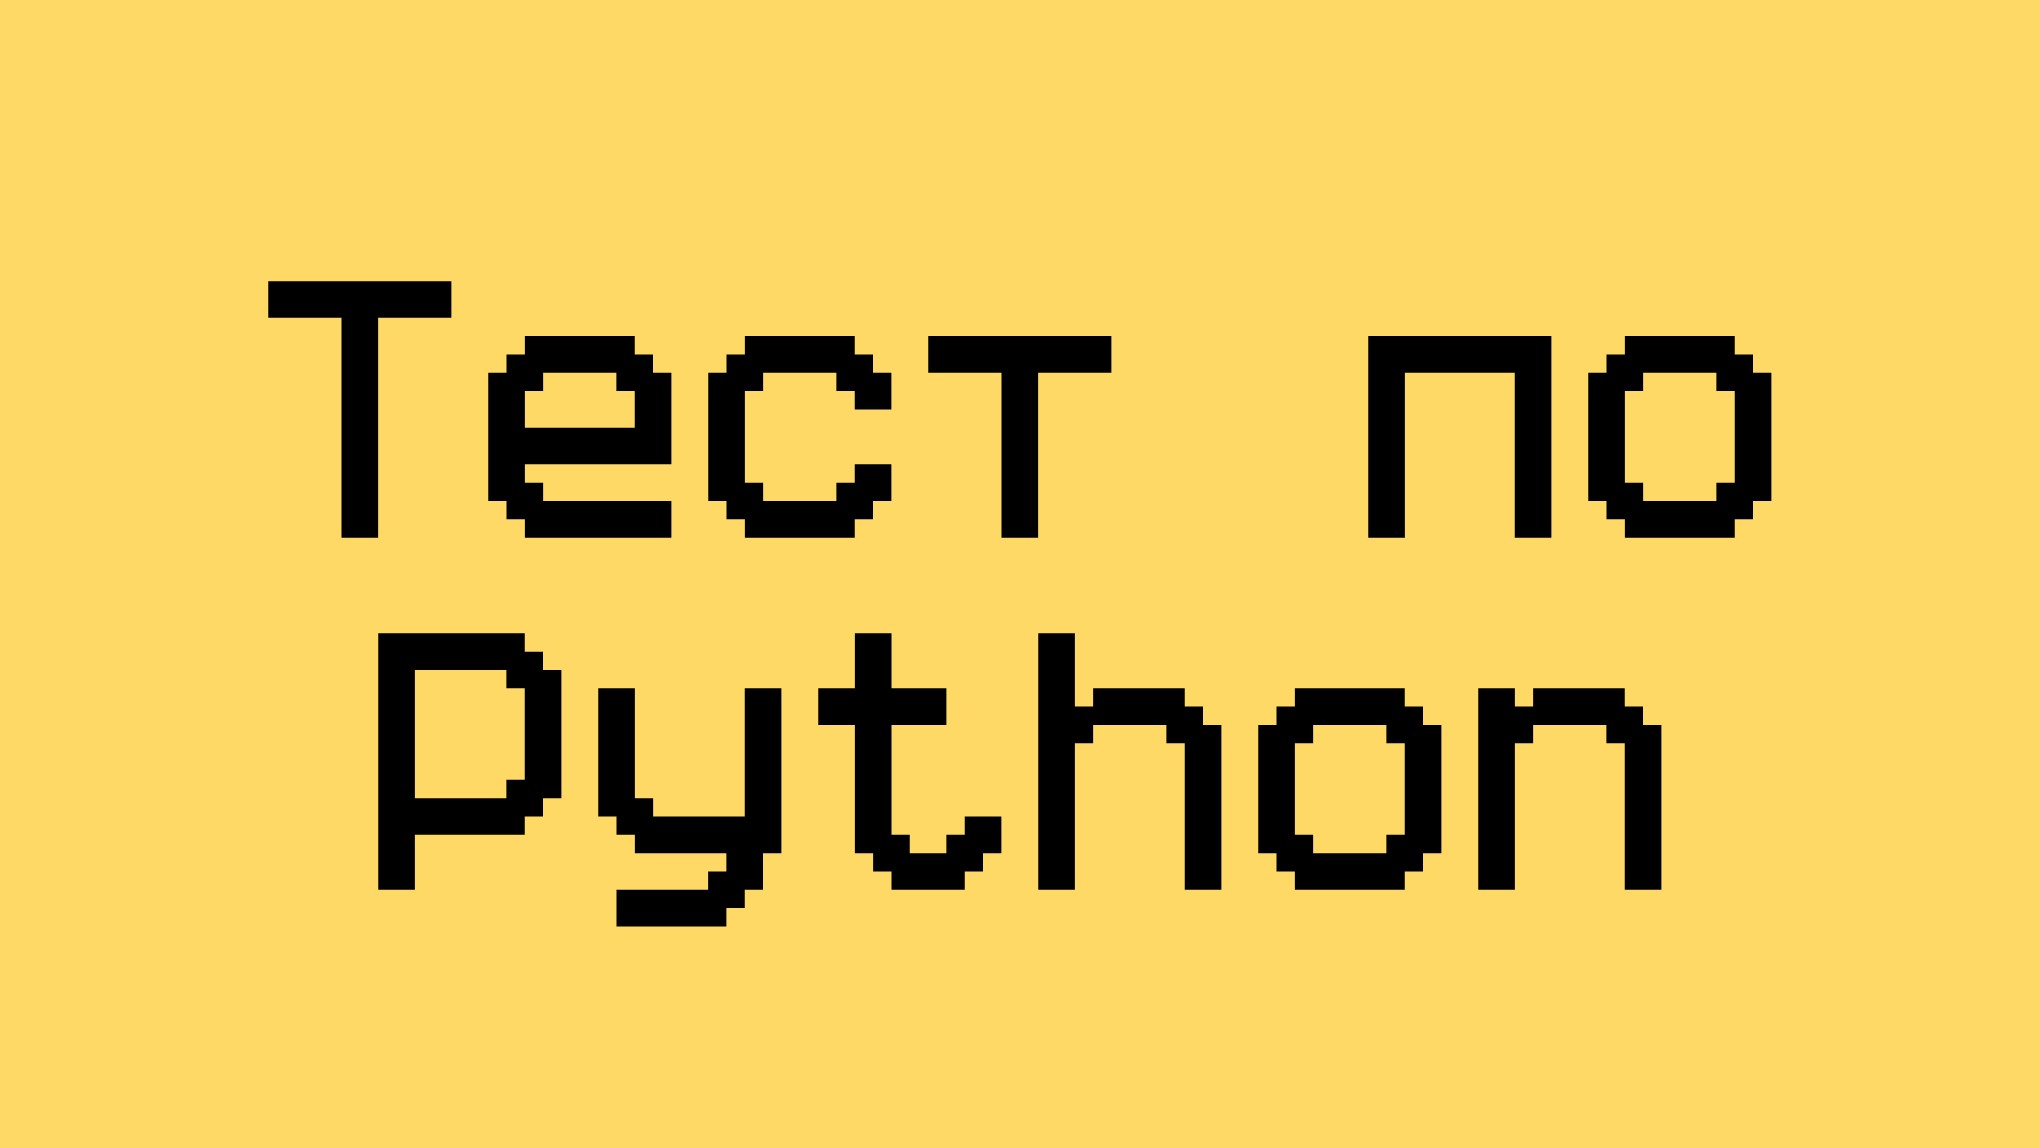 Тест 1 python